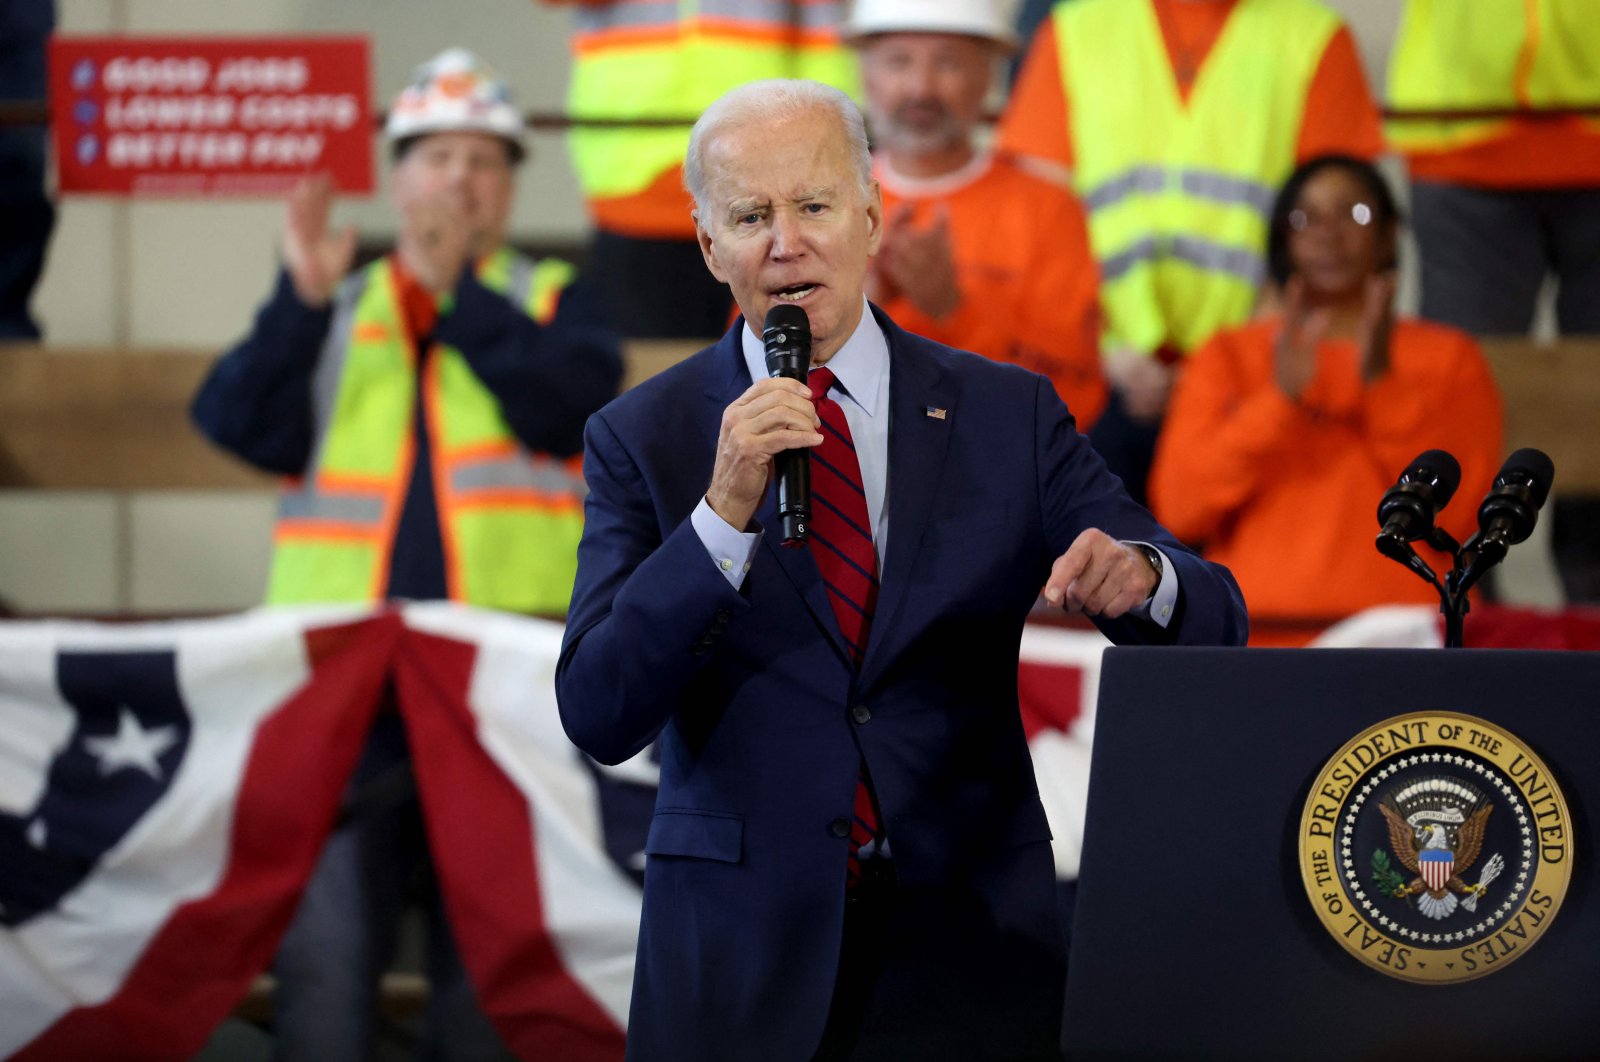 U.S. President Joe Biden speaks to guests at the Laborers’ International Union of North America (LIUNA) training center, in De Forest, Wisconsin, U.S., Feb. 8, 2023. (AFP Photo)